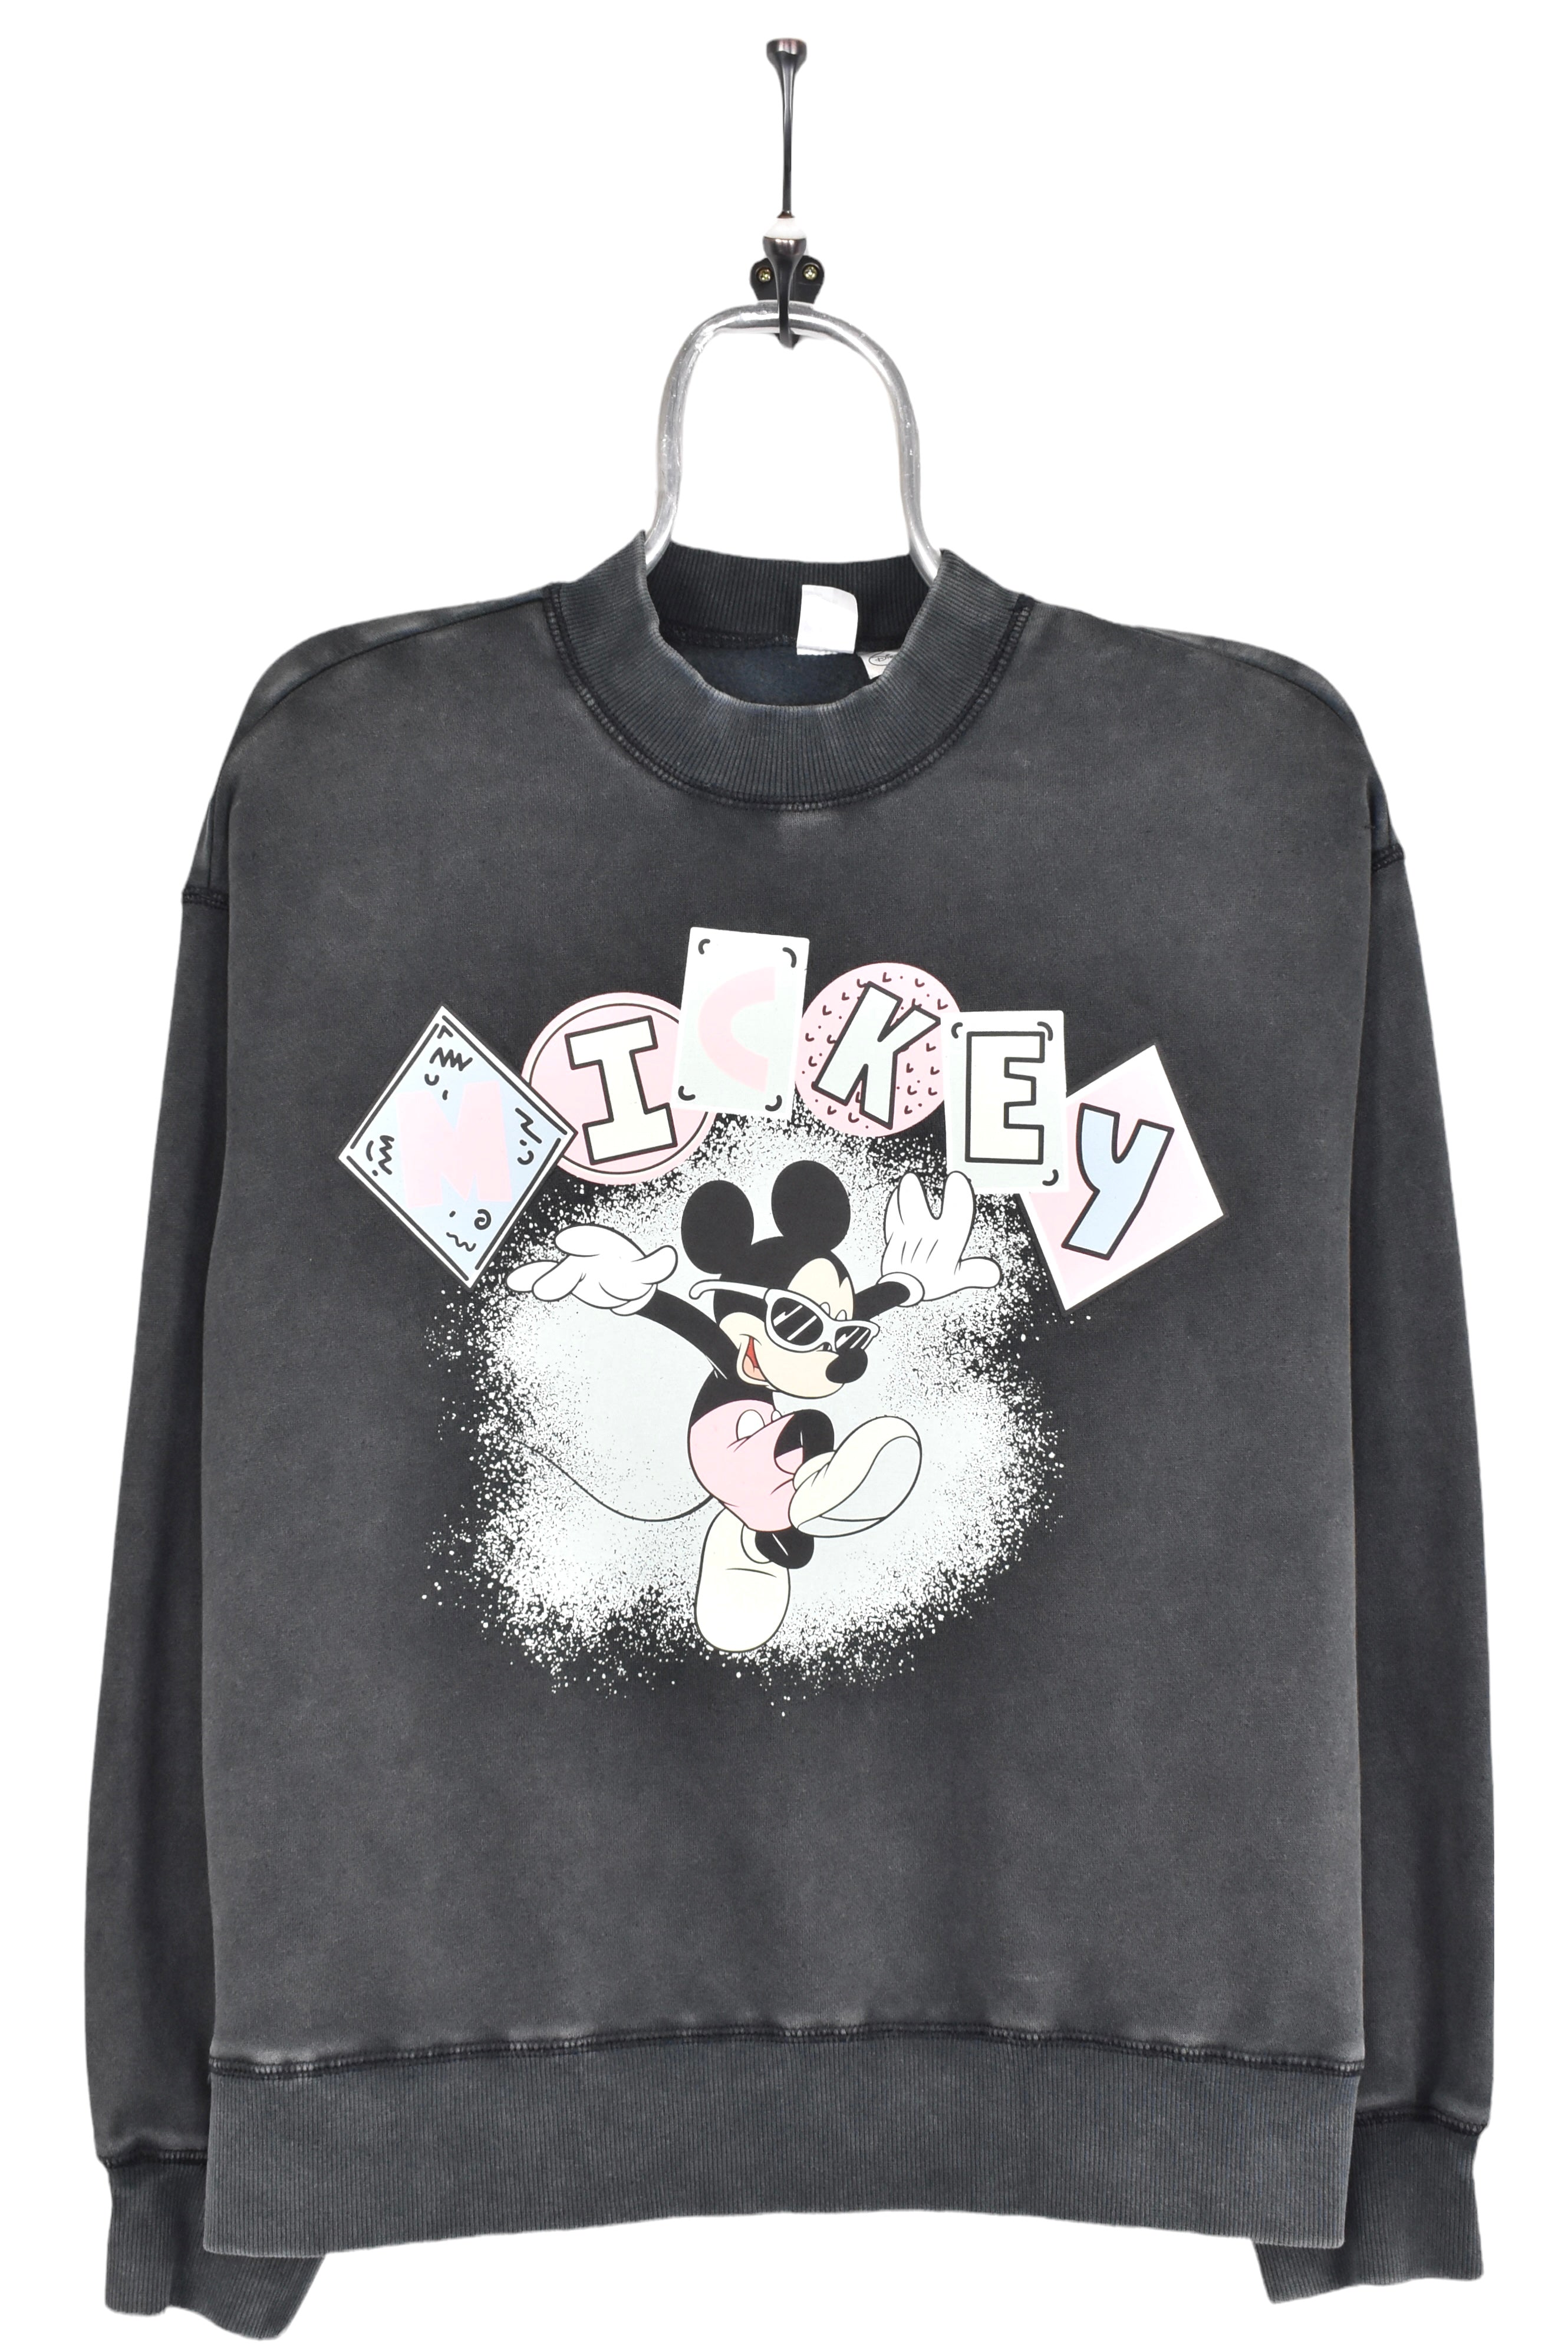 Women's modern Mickey Mouse sweatshirt, black graphic crewneck - AU Medium DISNEY / CARTOON